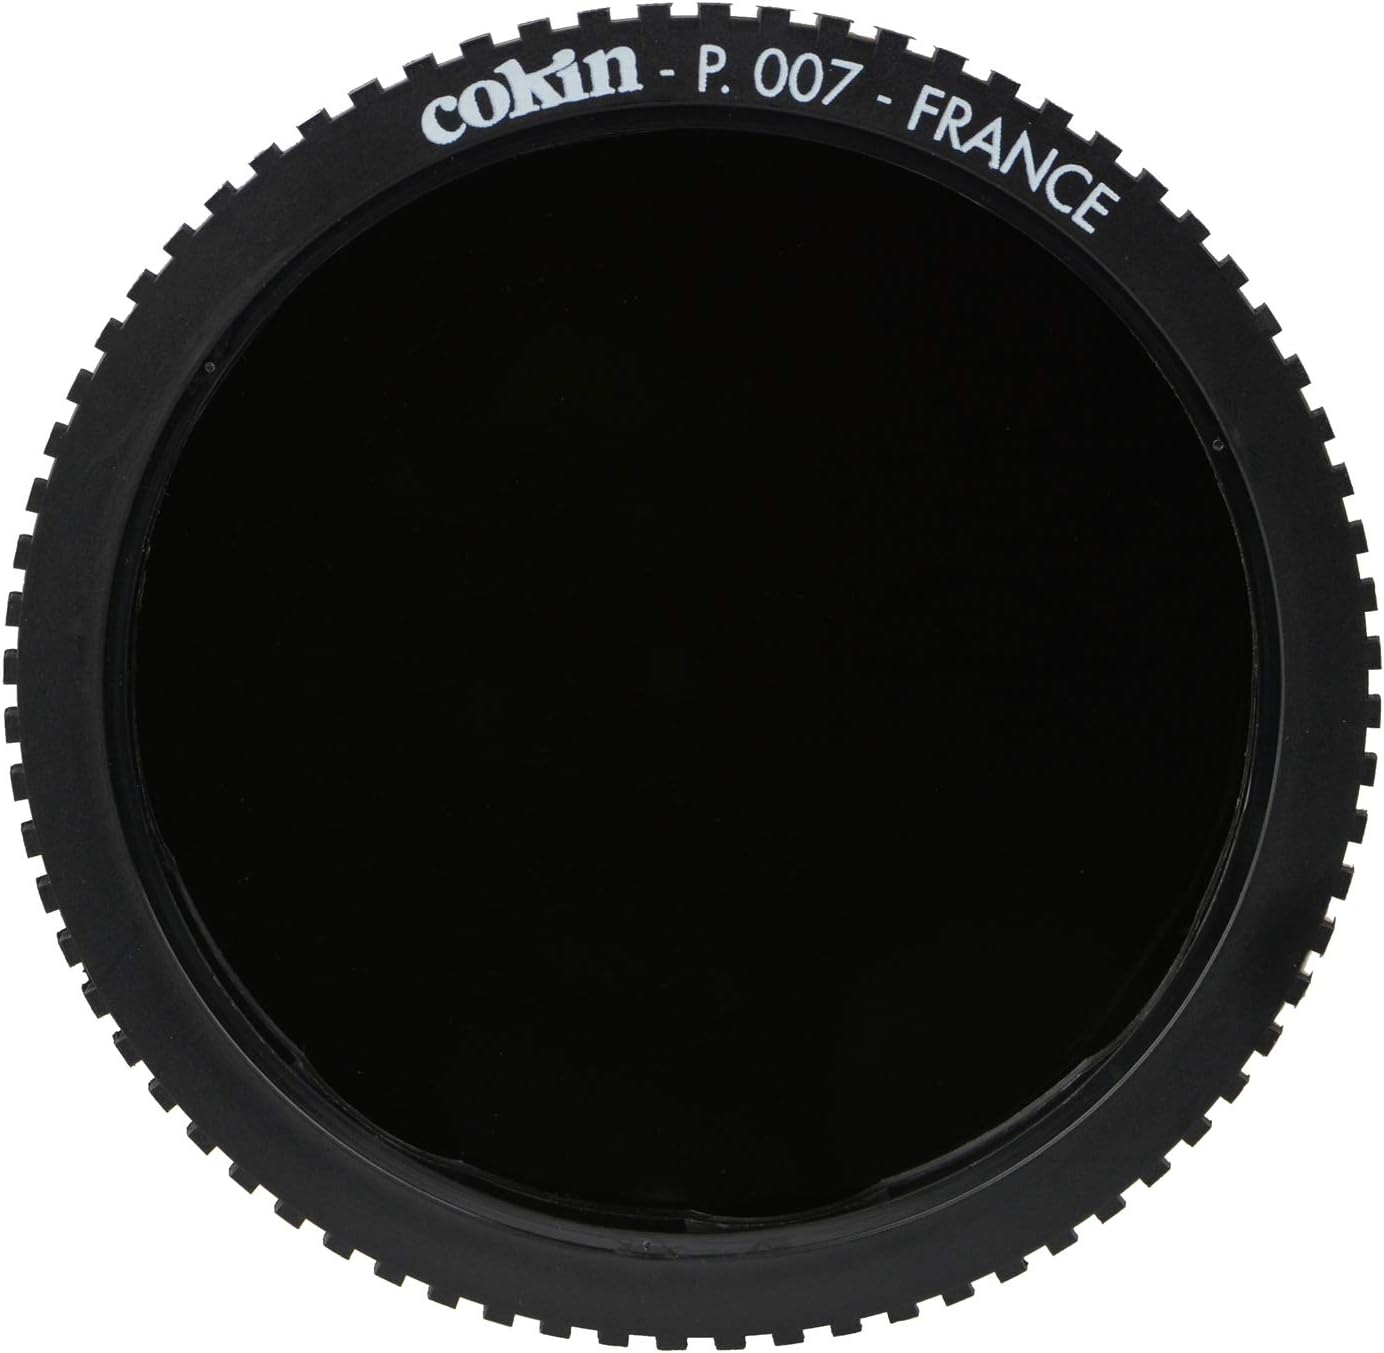 Cokin 89B Infrared Filter #007